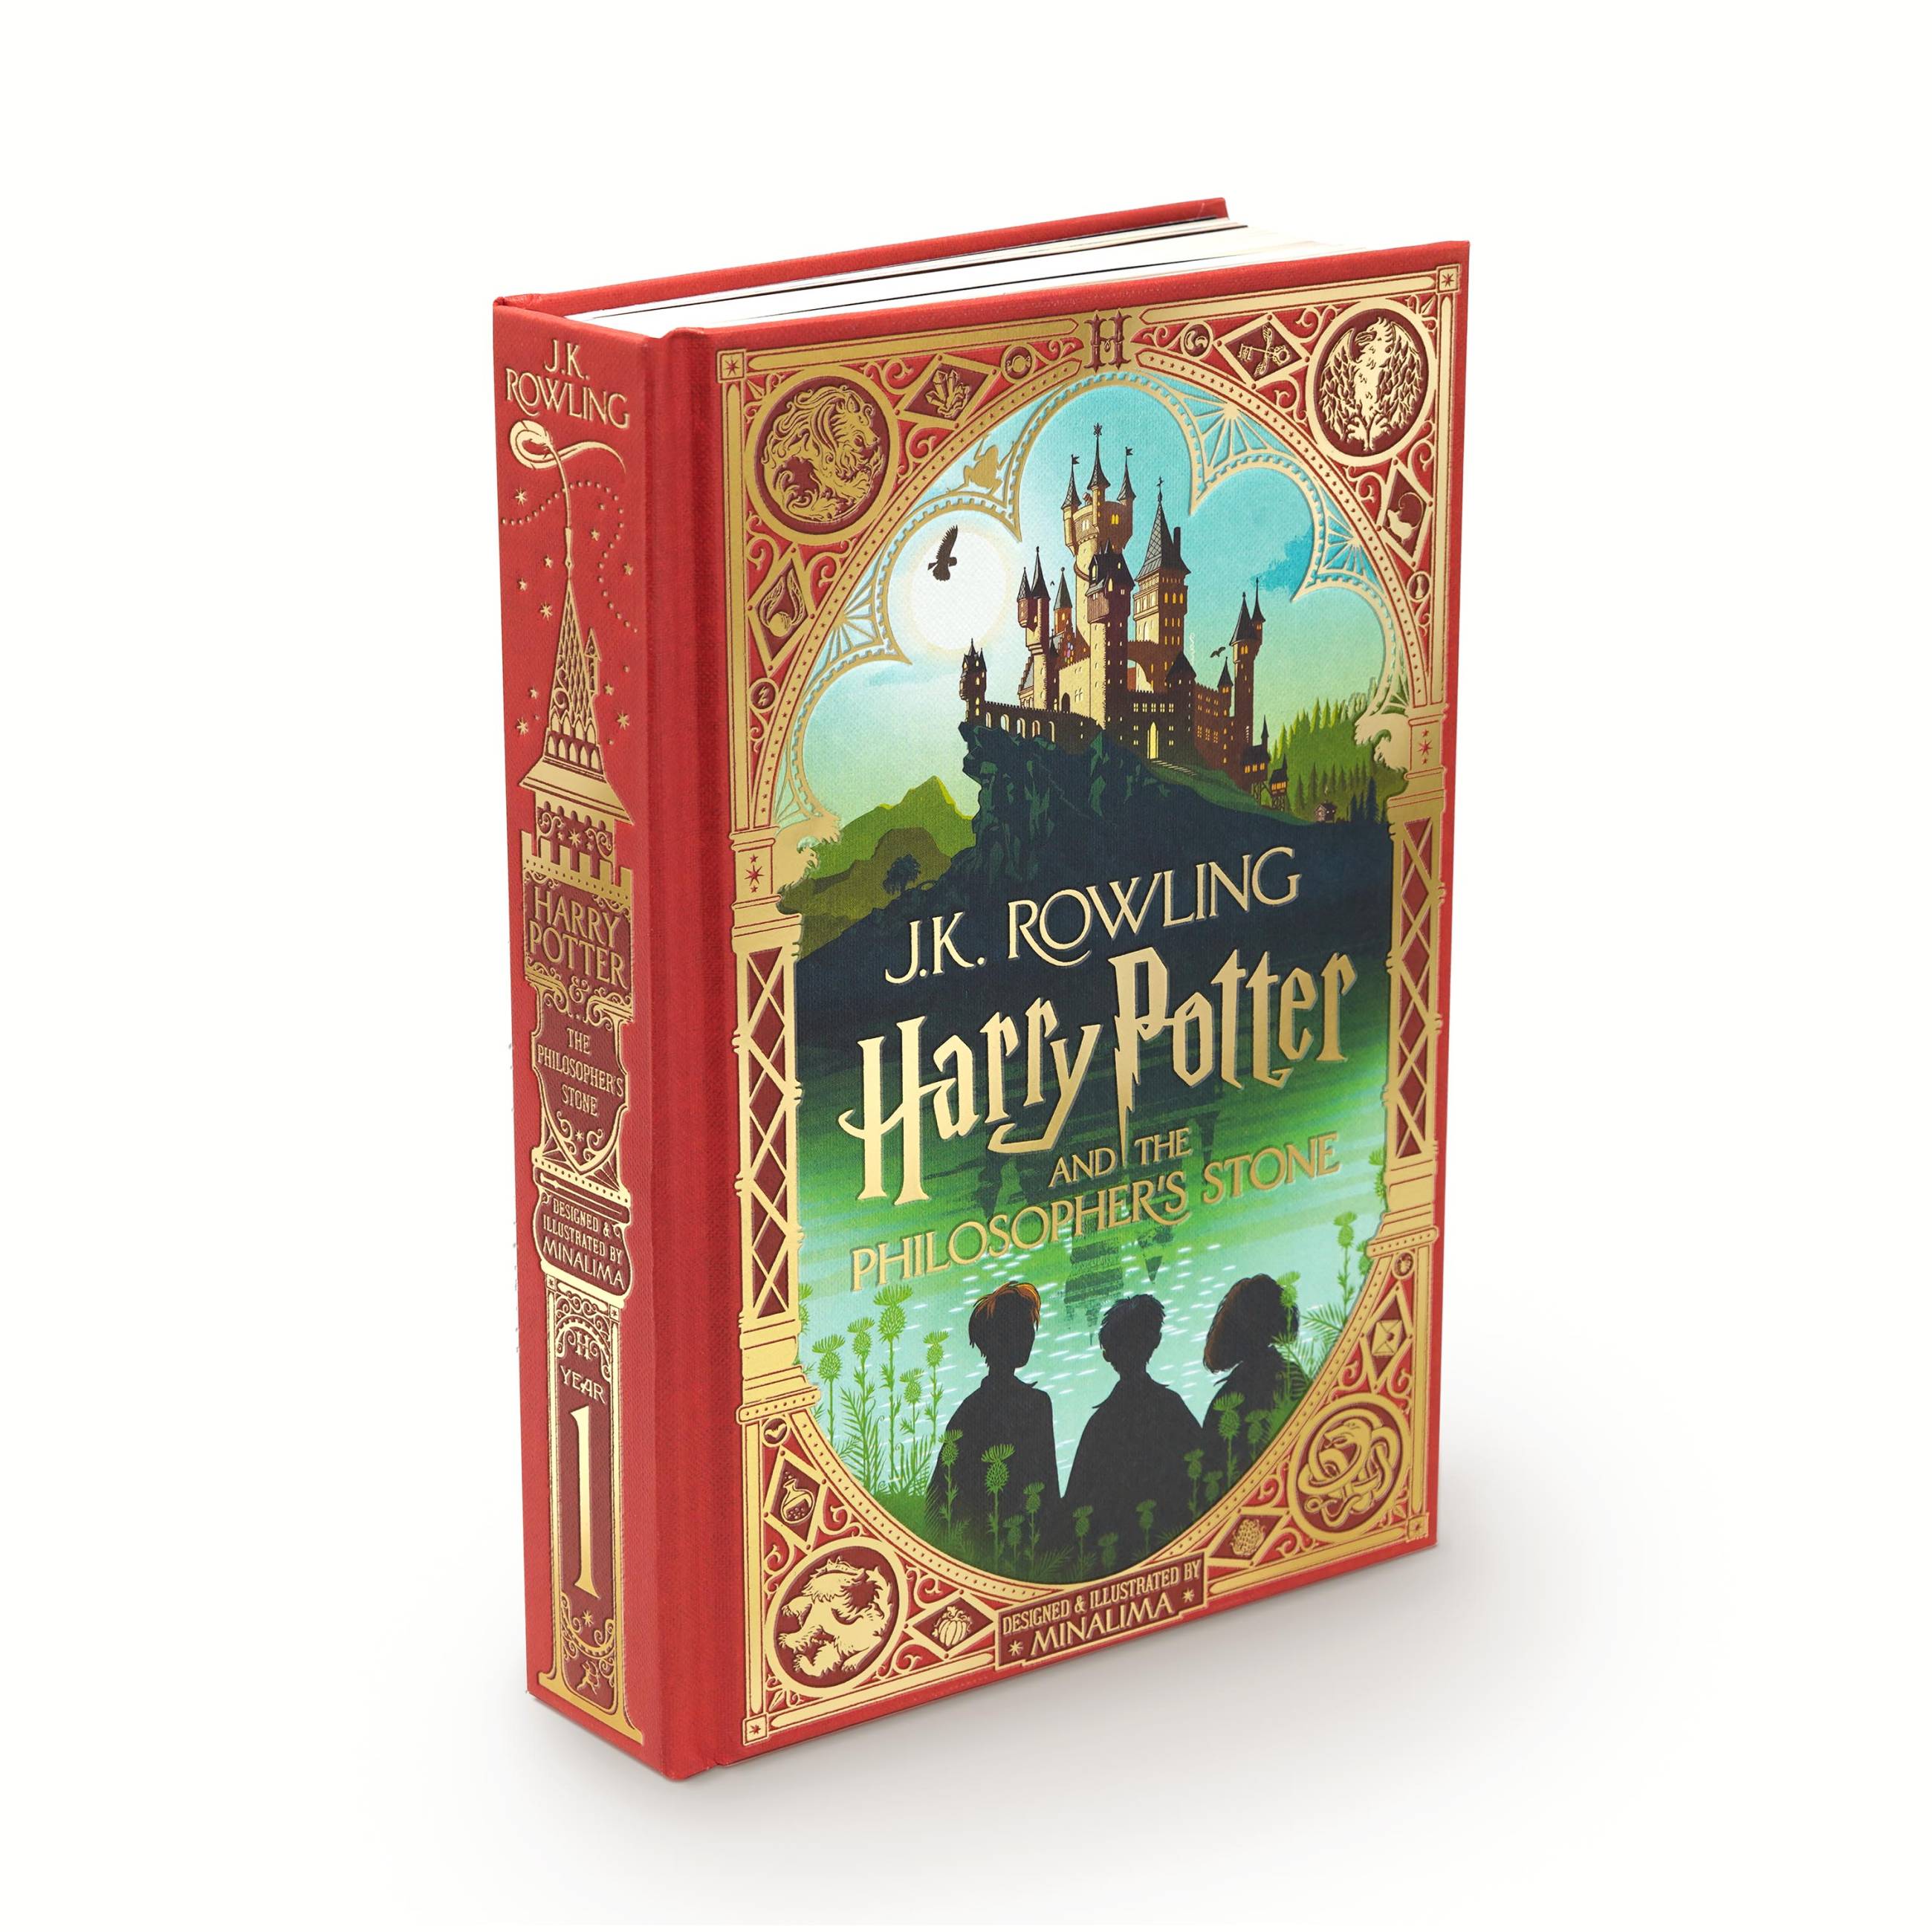 Harry Potter and the Philosopher's Stone (UK Edition) - MinaLima